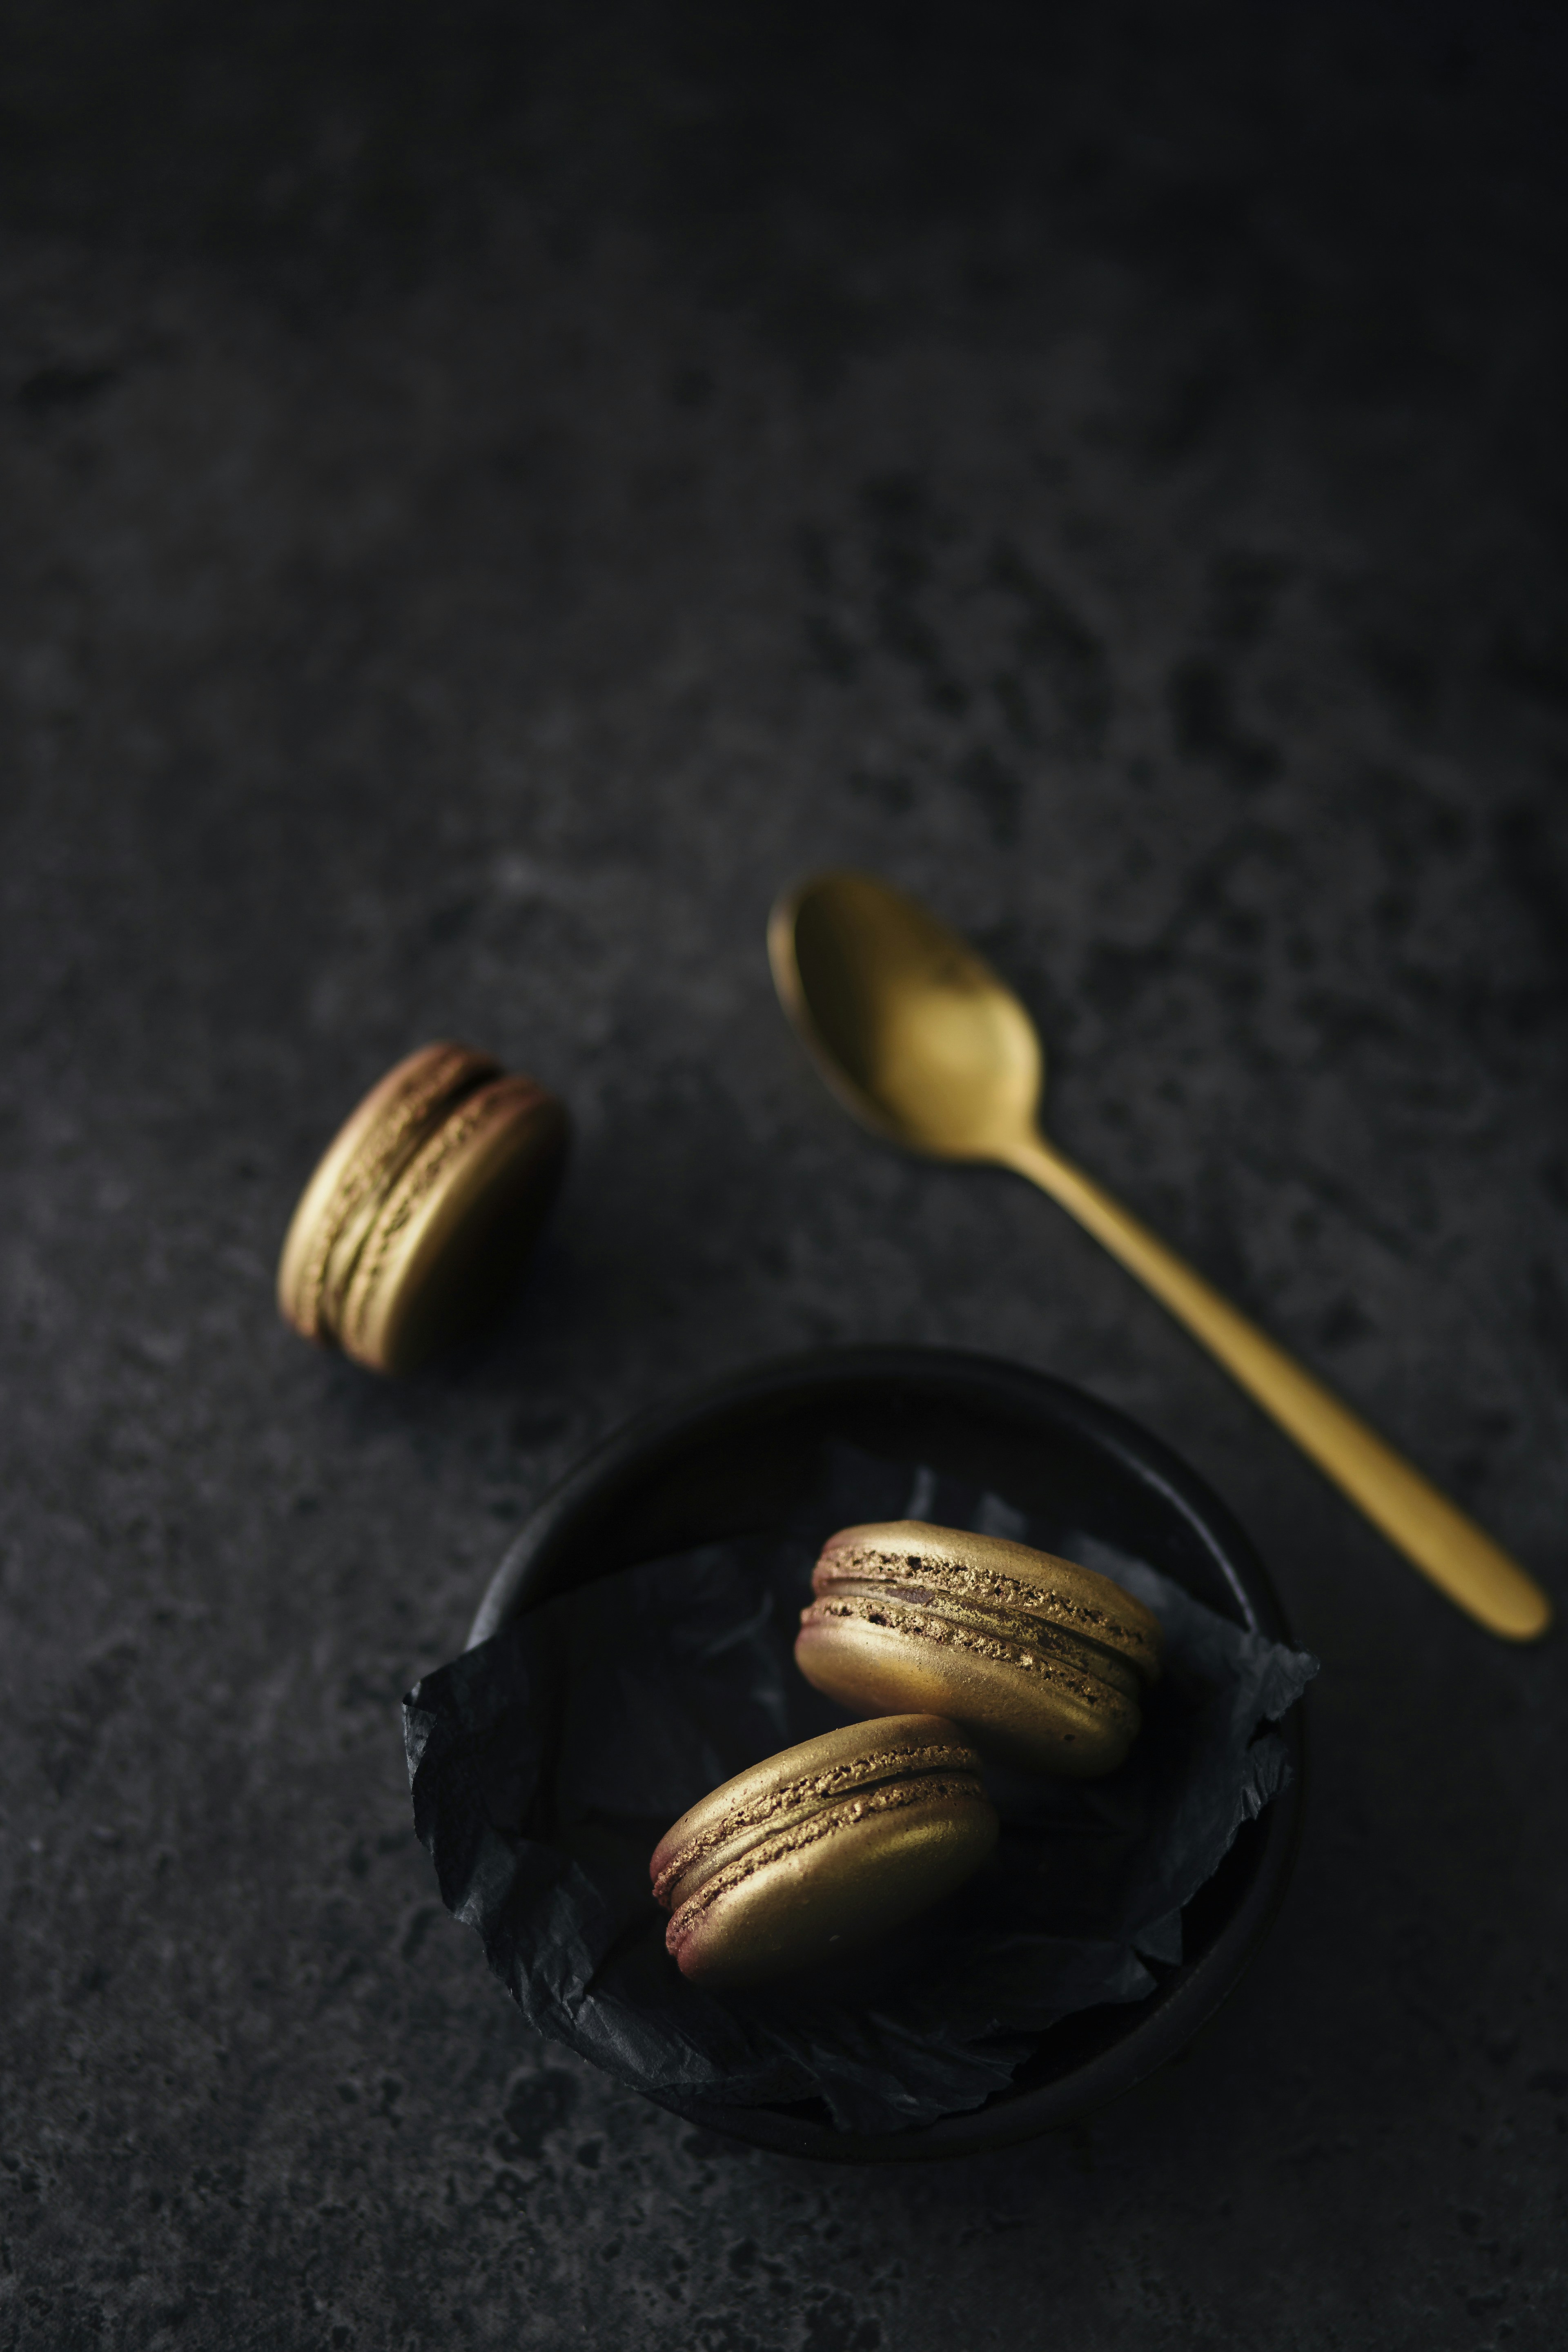 Gold, glamorous, and sweet! Emphasises on those gold sprayed macarons.